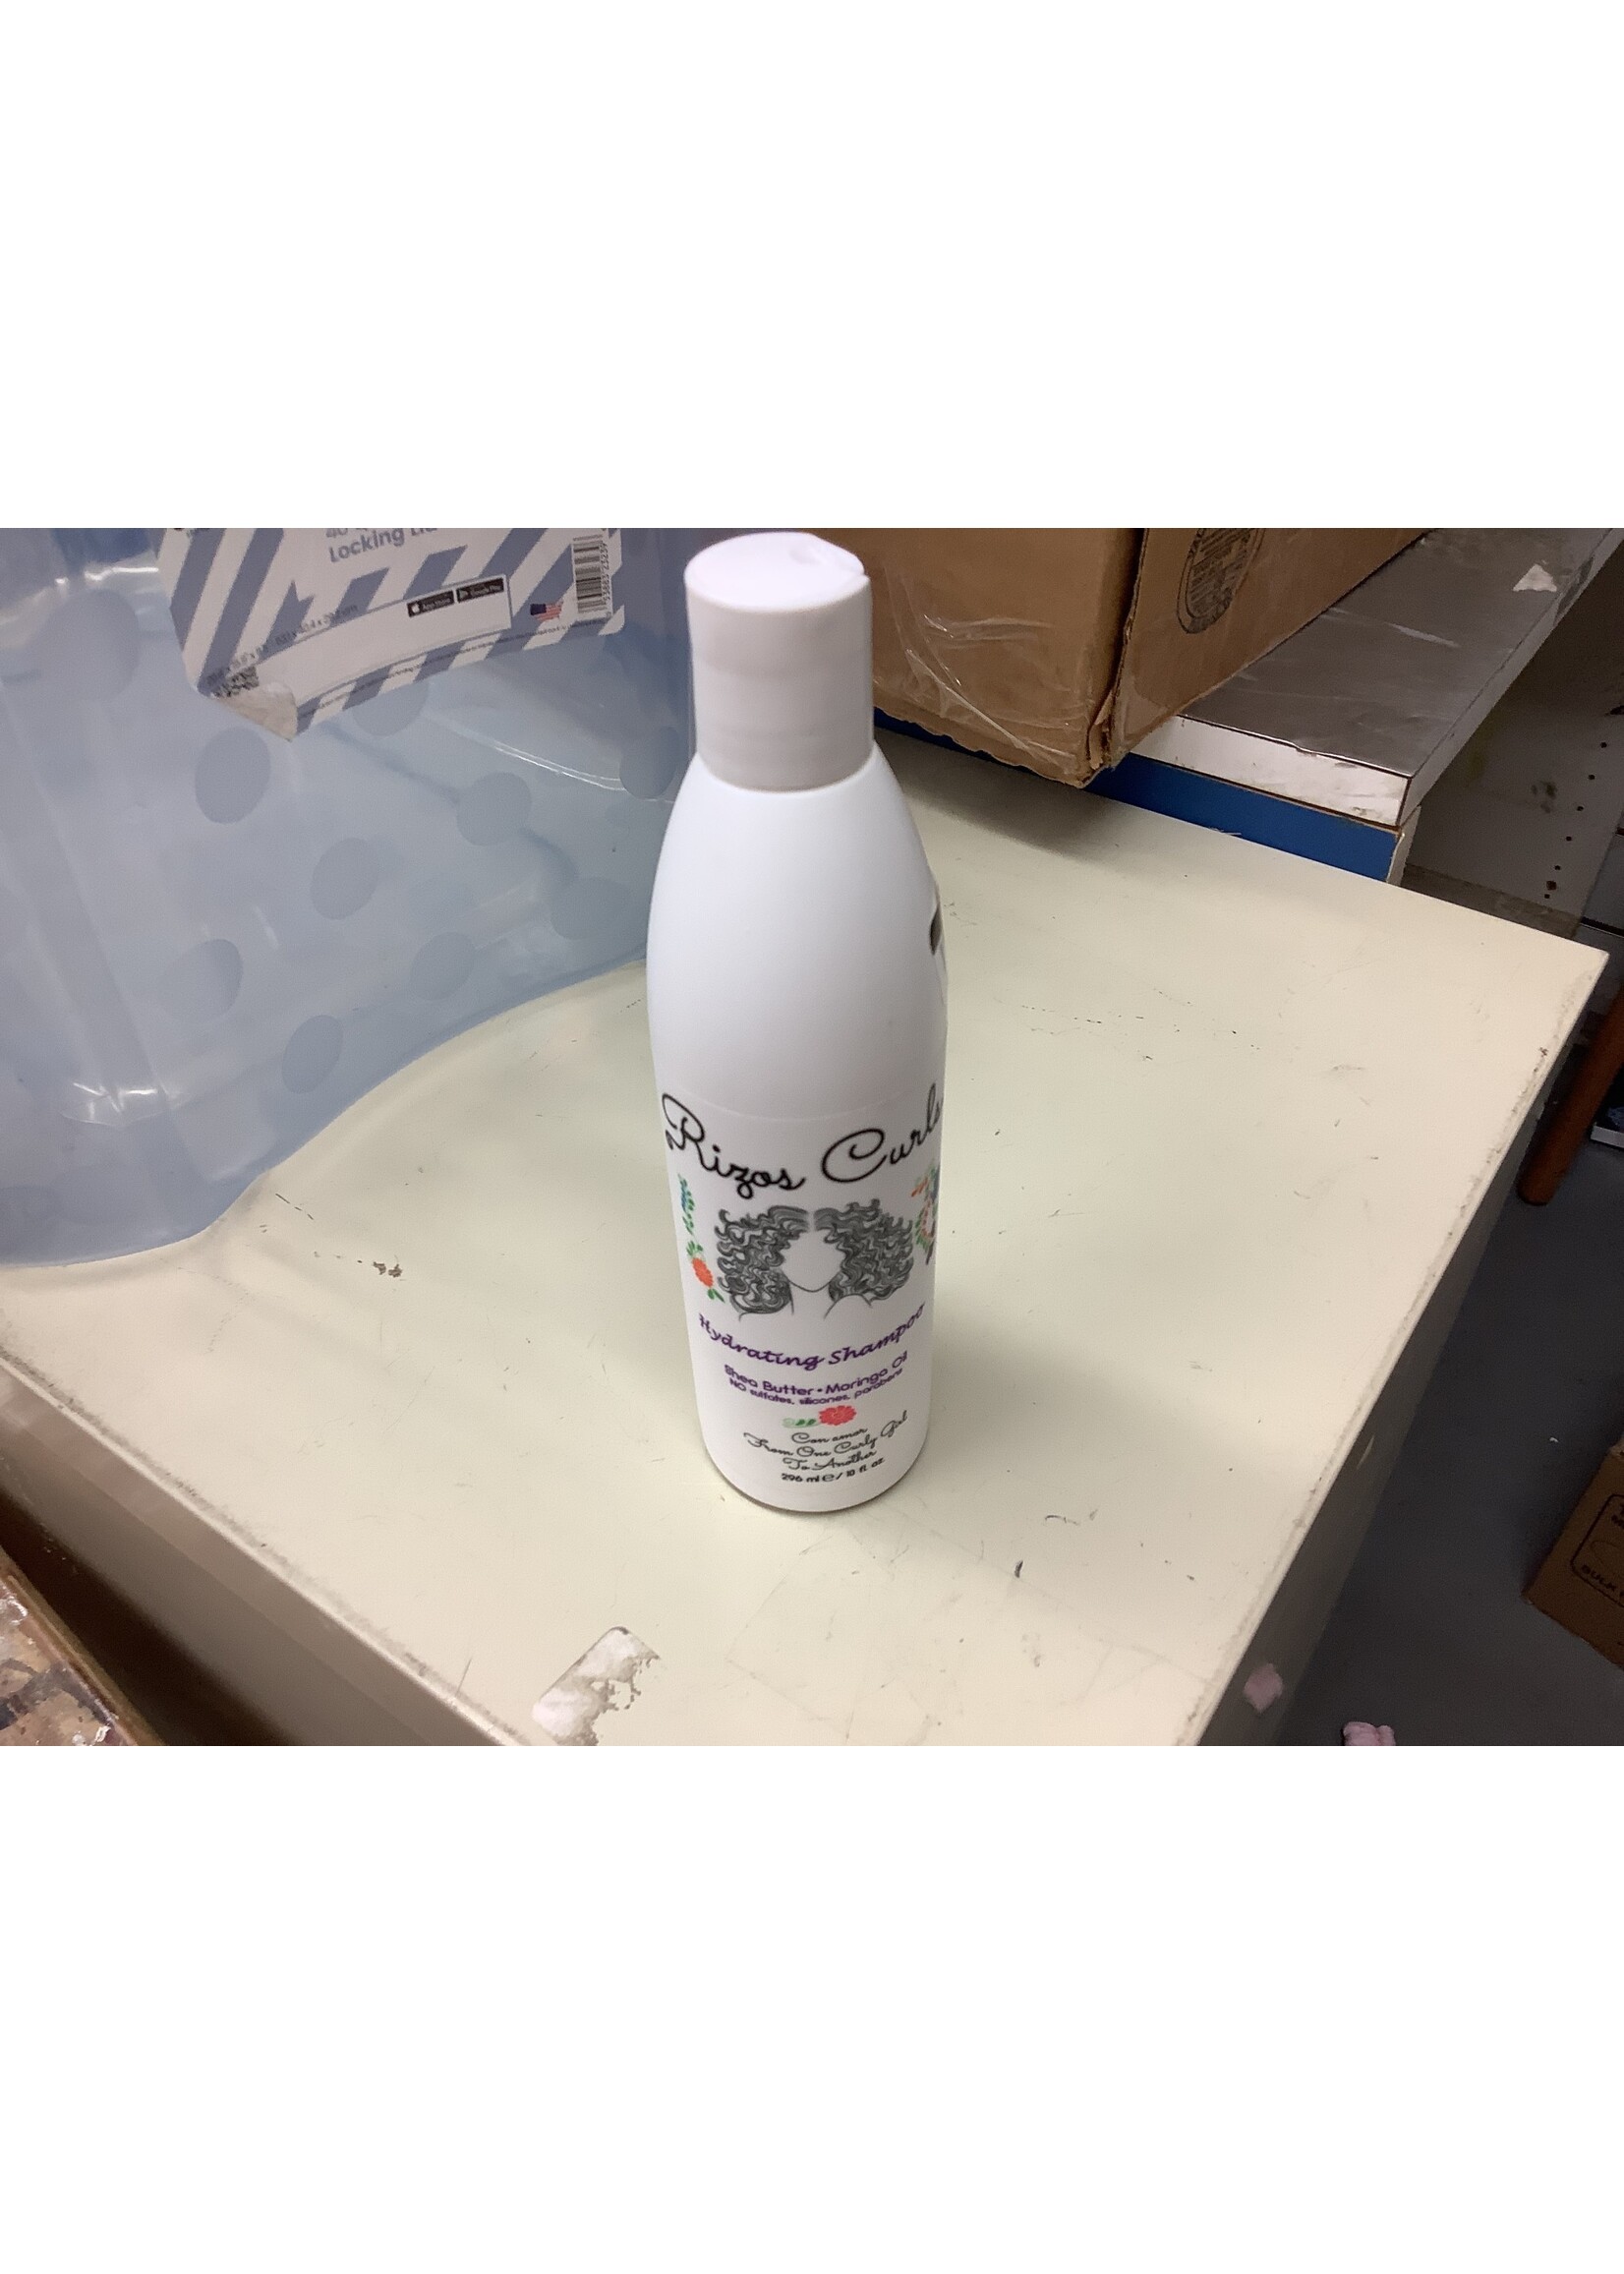 Rizos Curls Hydrating Shampoo - 10 fl oz (open container)